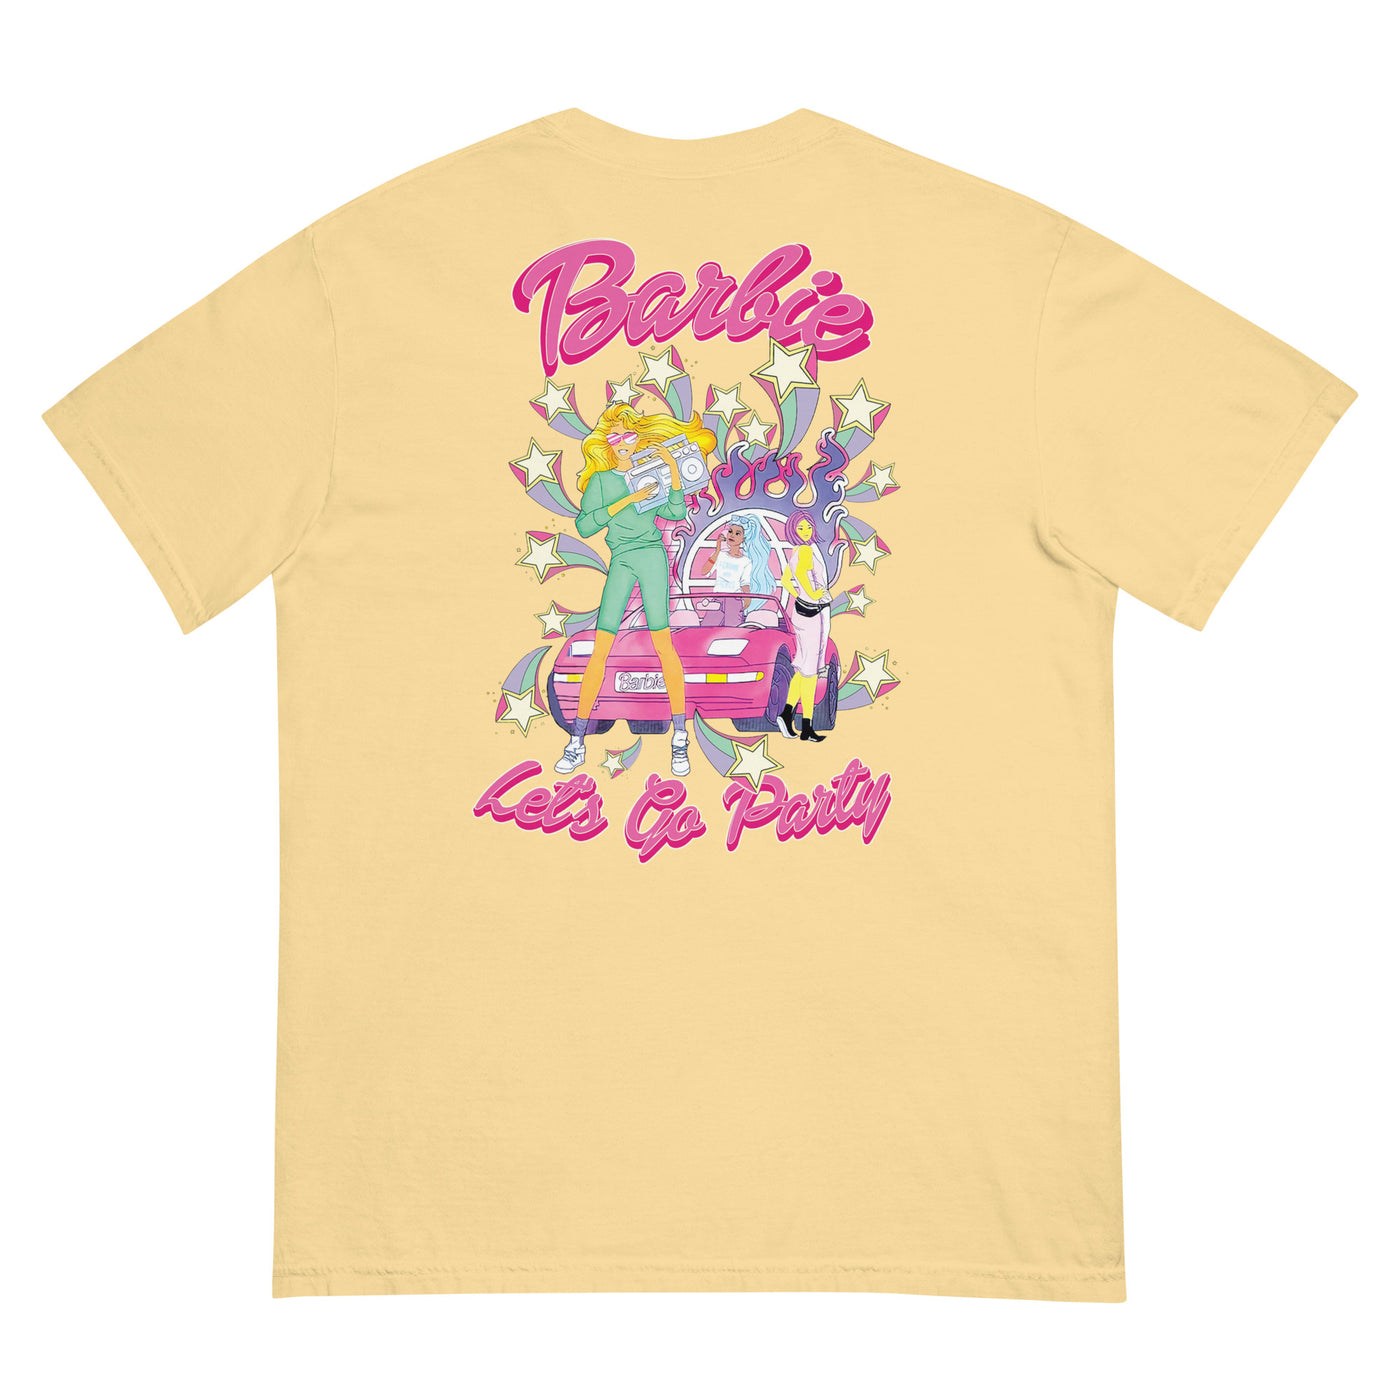 Monogrammed 'Let's Go Party' Front & Back T-Shirt